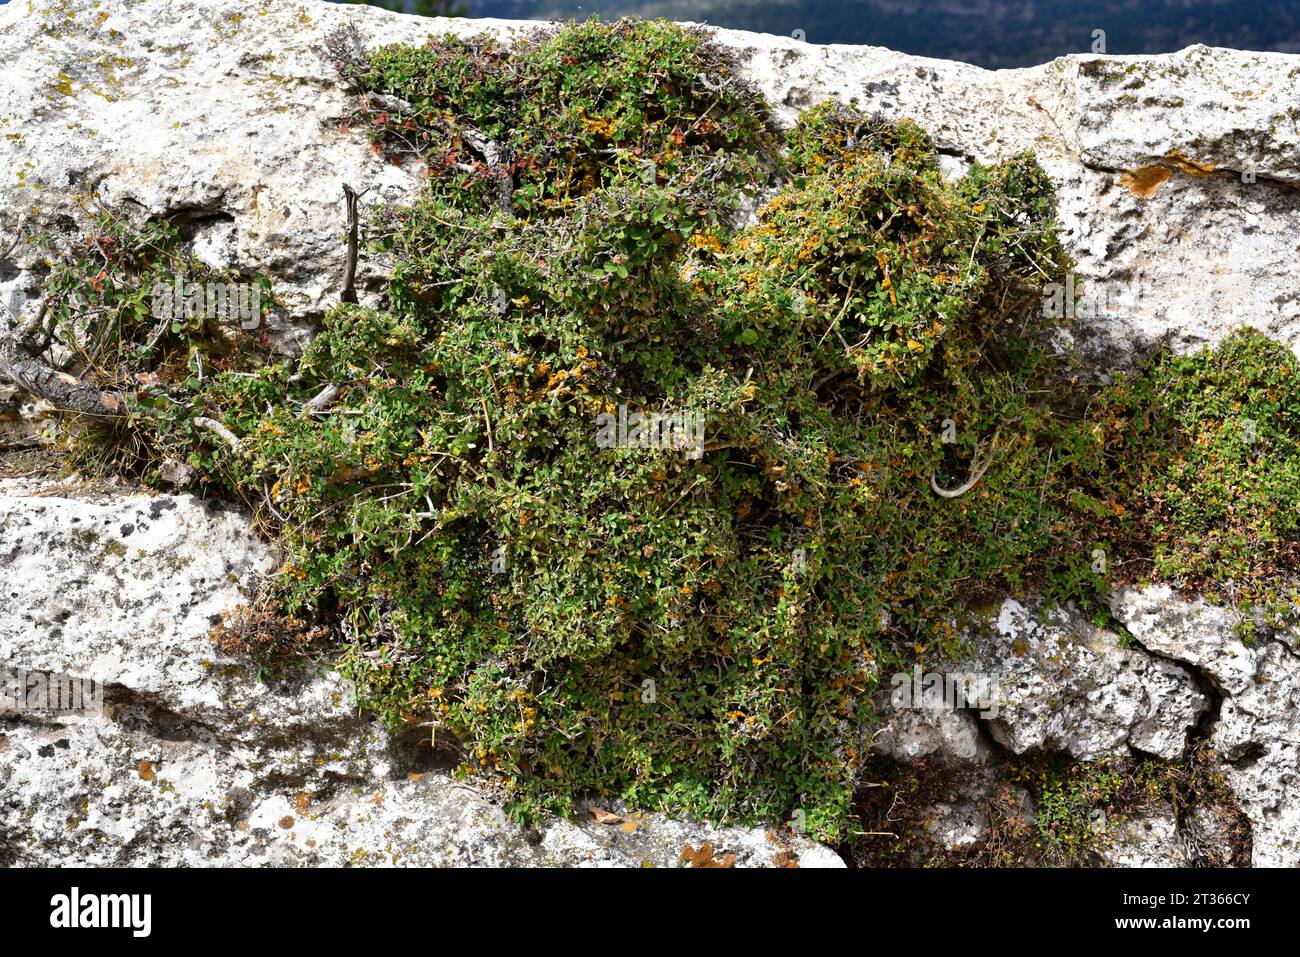 Globularia cordifolia repens or Globularia repens is a prostrate shrub endemic to mountains of southwestern Europe. This photo was taken in Els Ports, Stock Photo